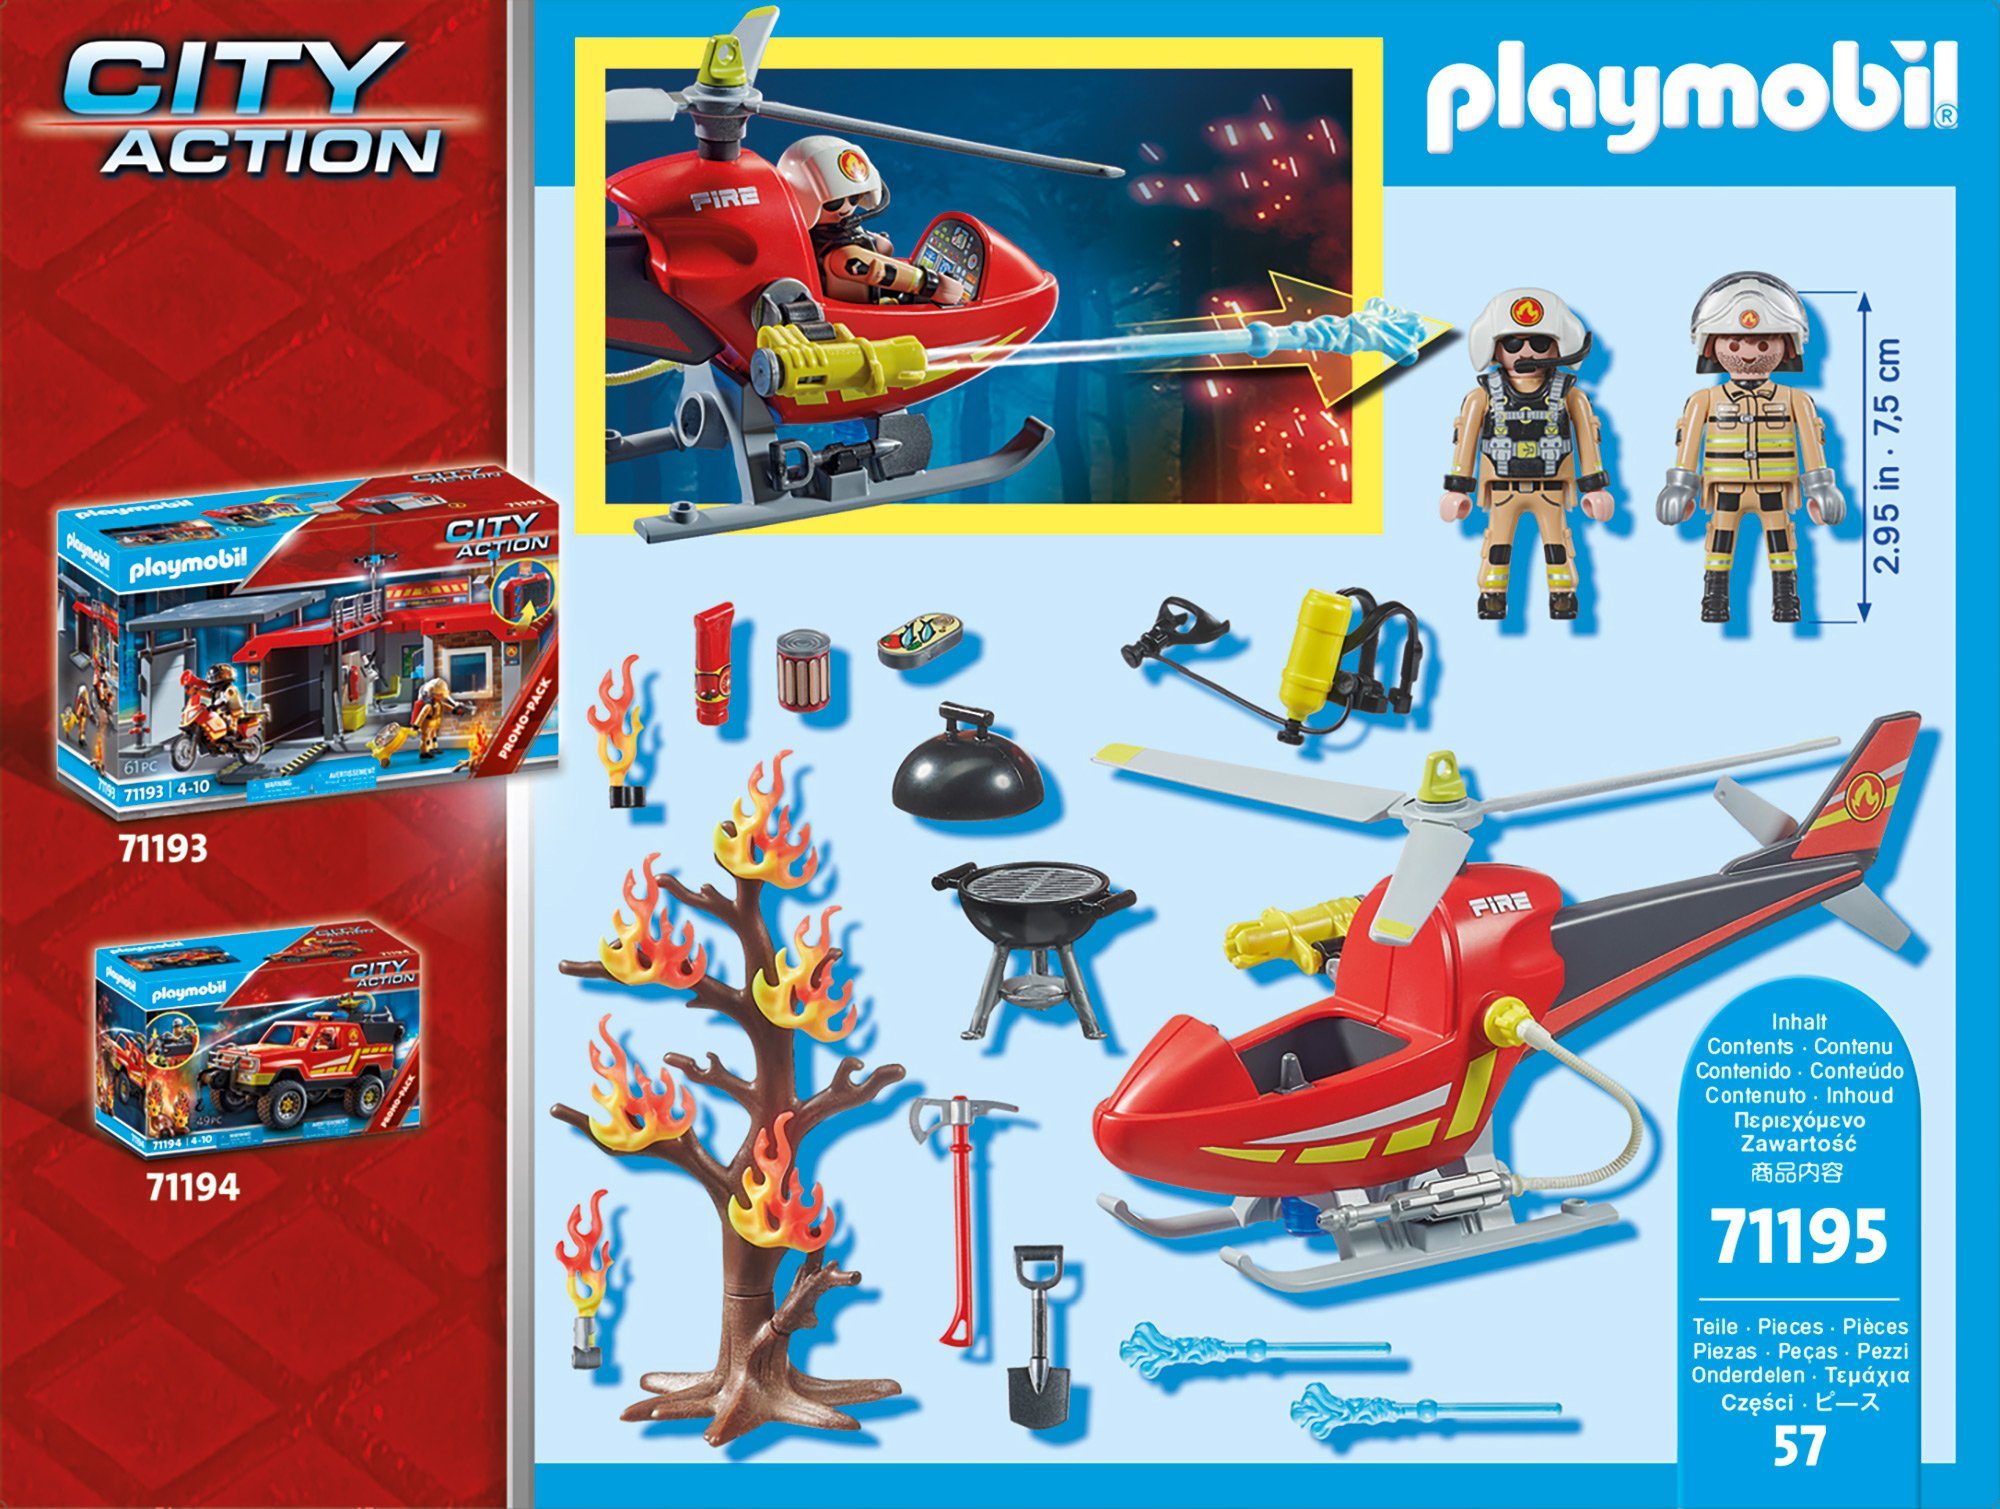 in Konstruktions-Spielset Germany St), (57 Made Action, Playmobil® (71195), Feuerwehr-Hubschrauber City